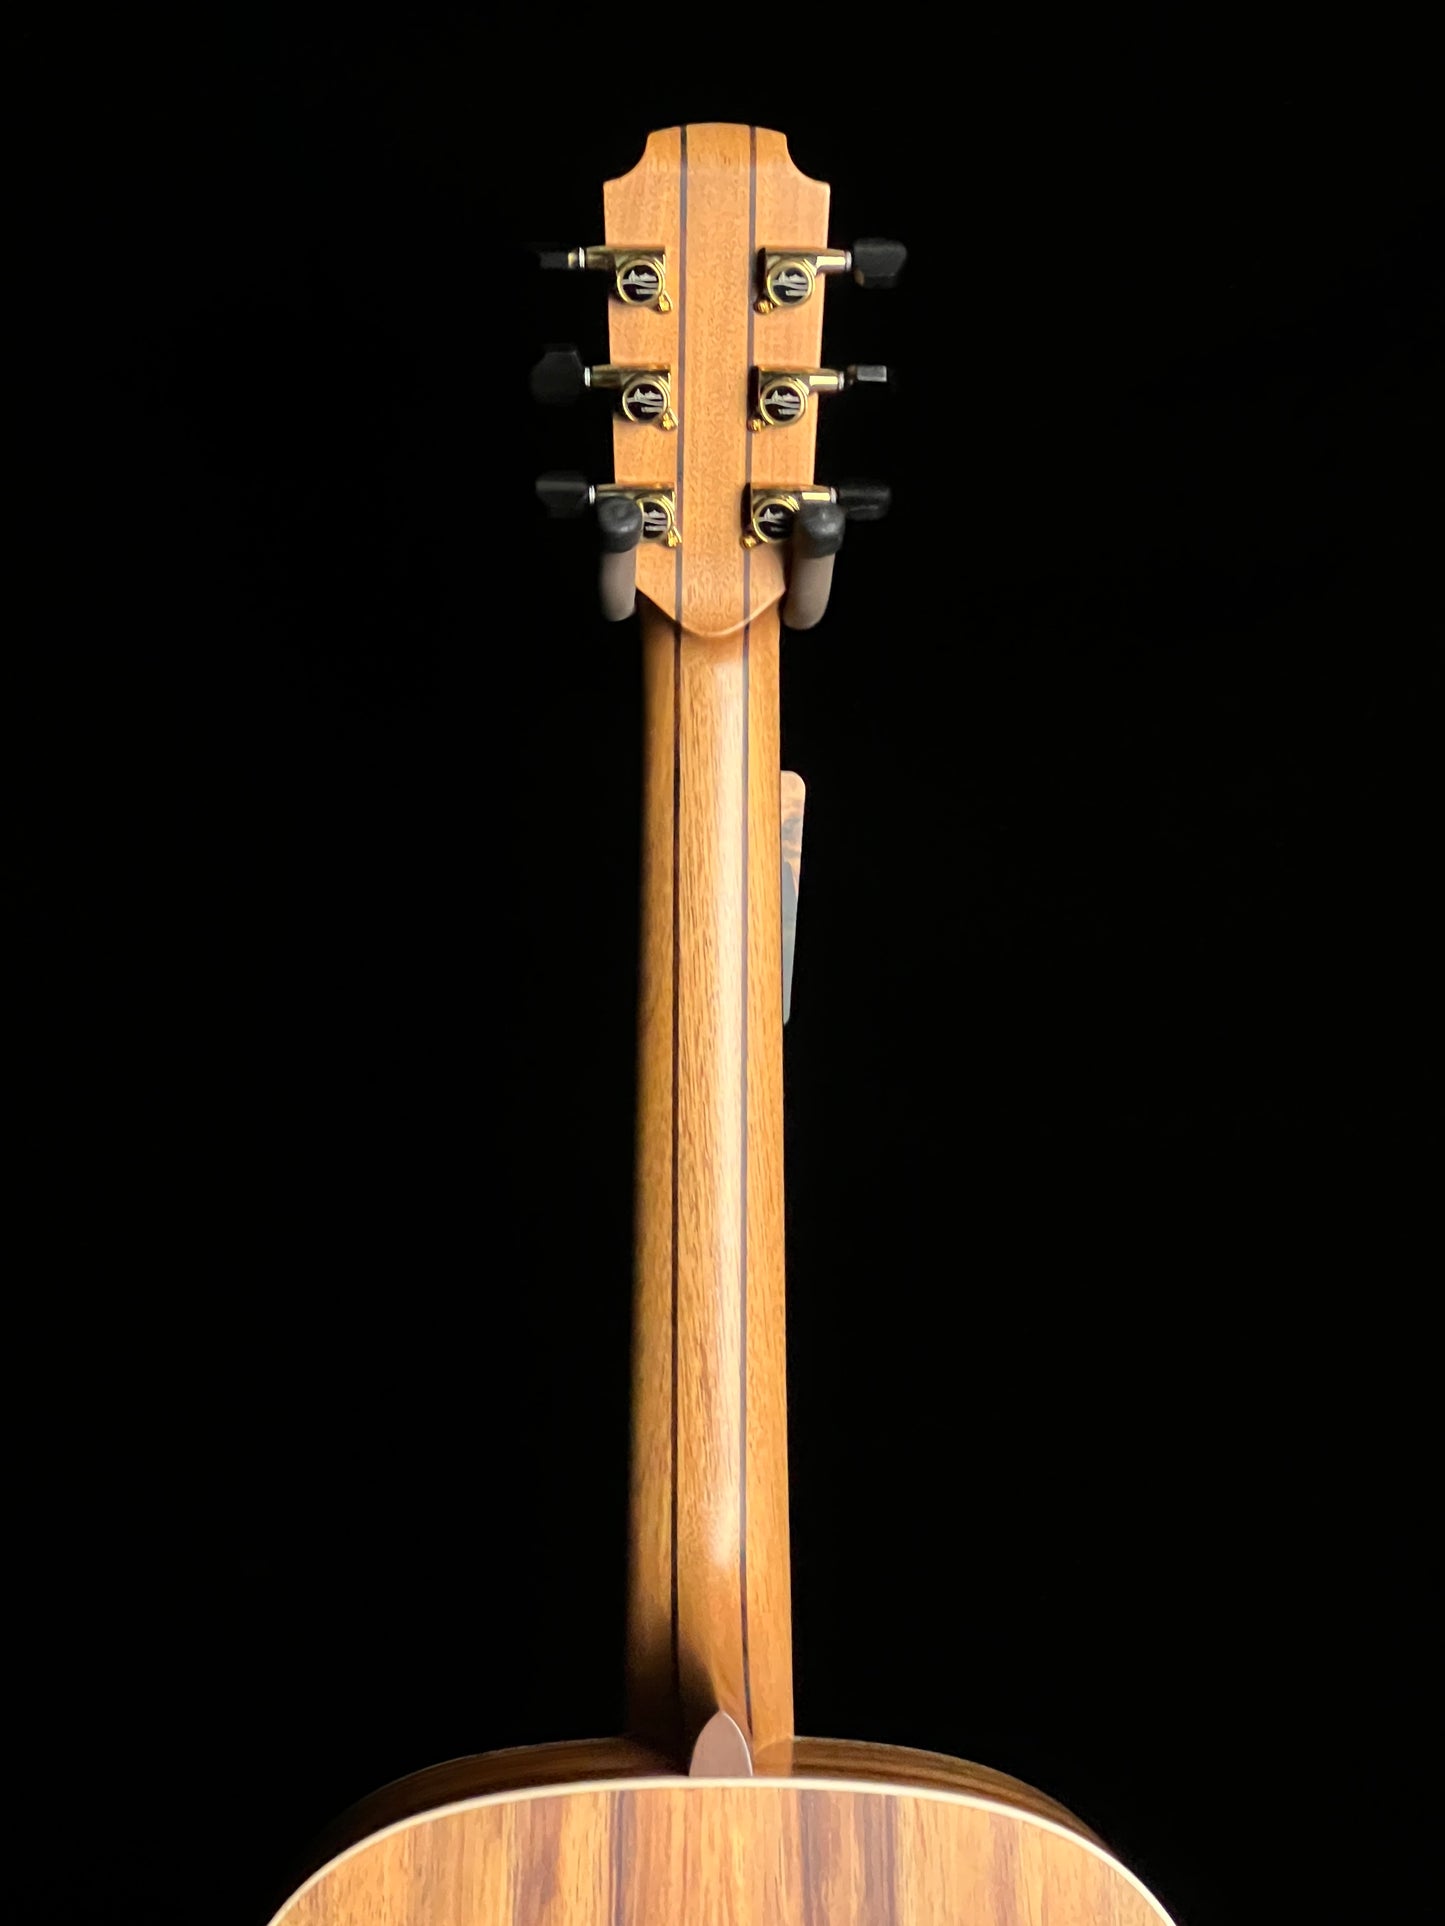 Lowden O-34 The Original Series 34 Acoustic Guitar Sitka Spruce / Koa